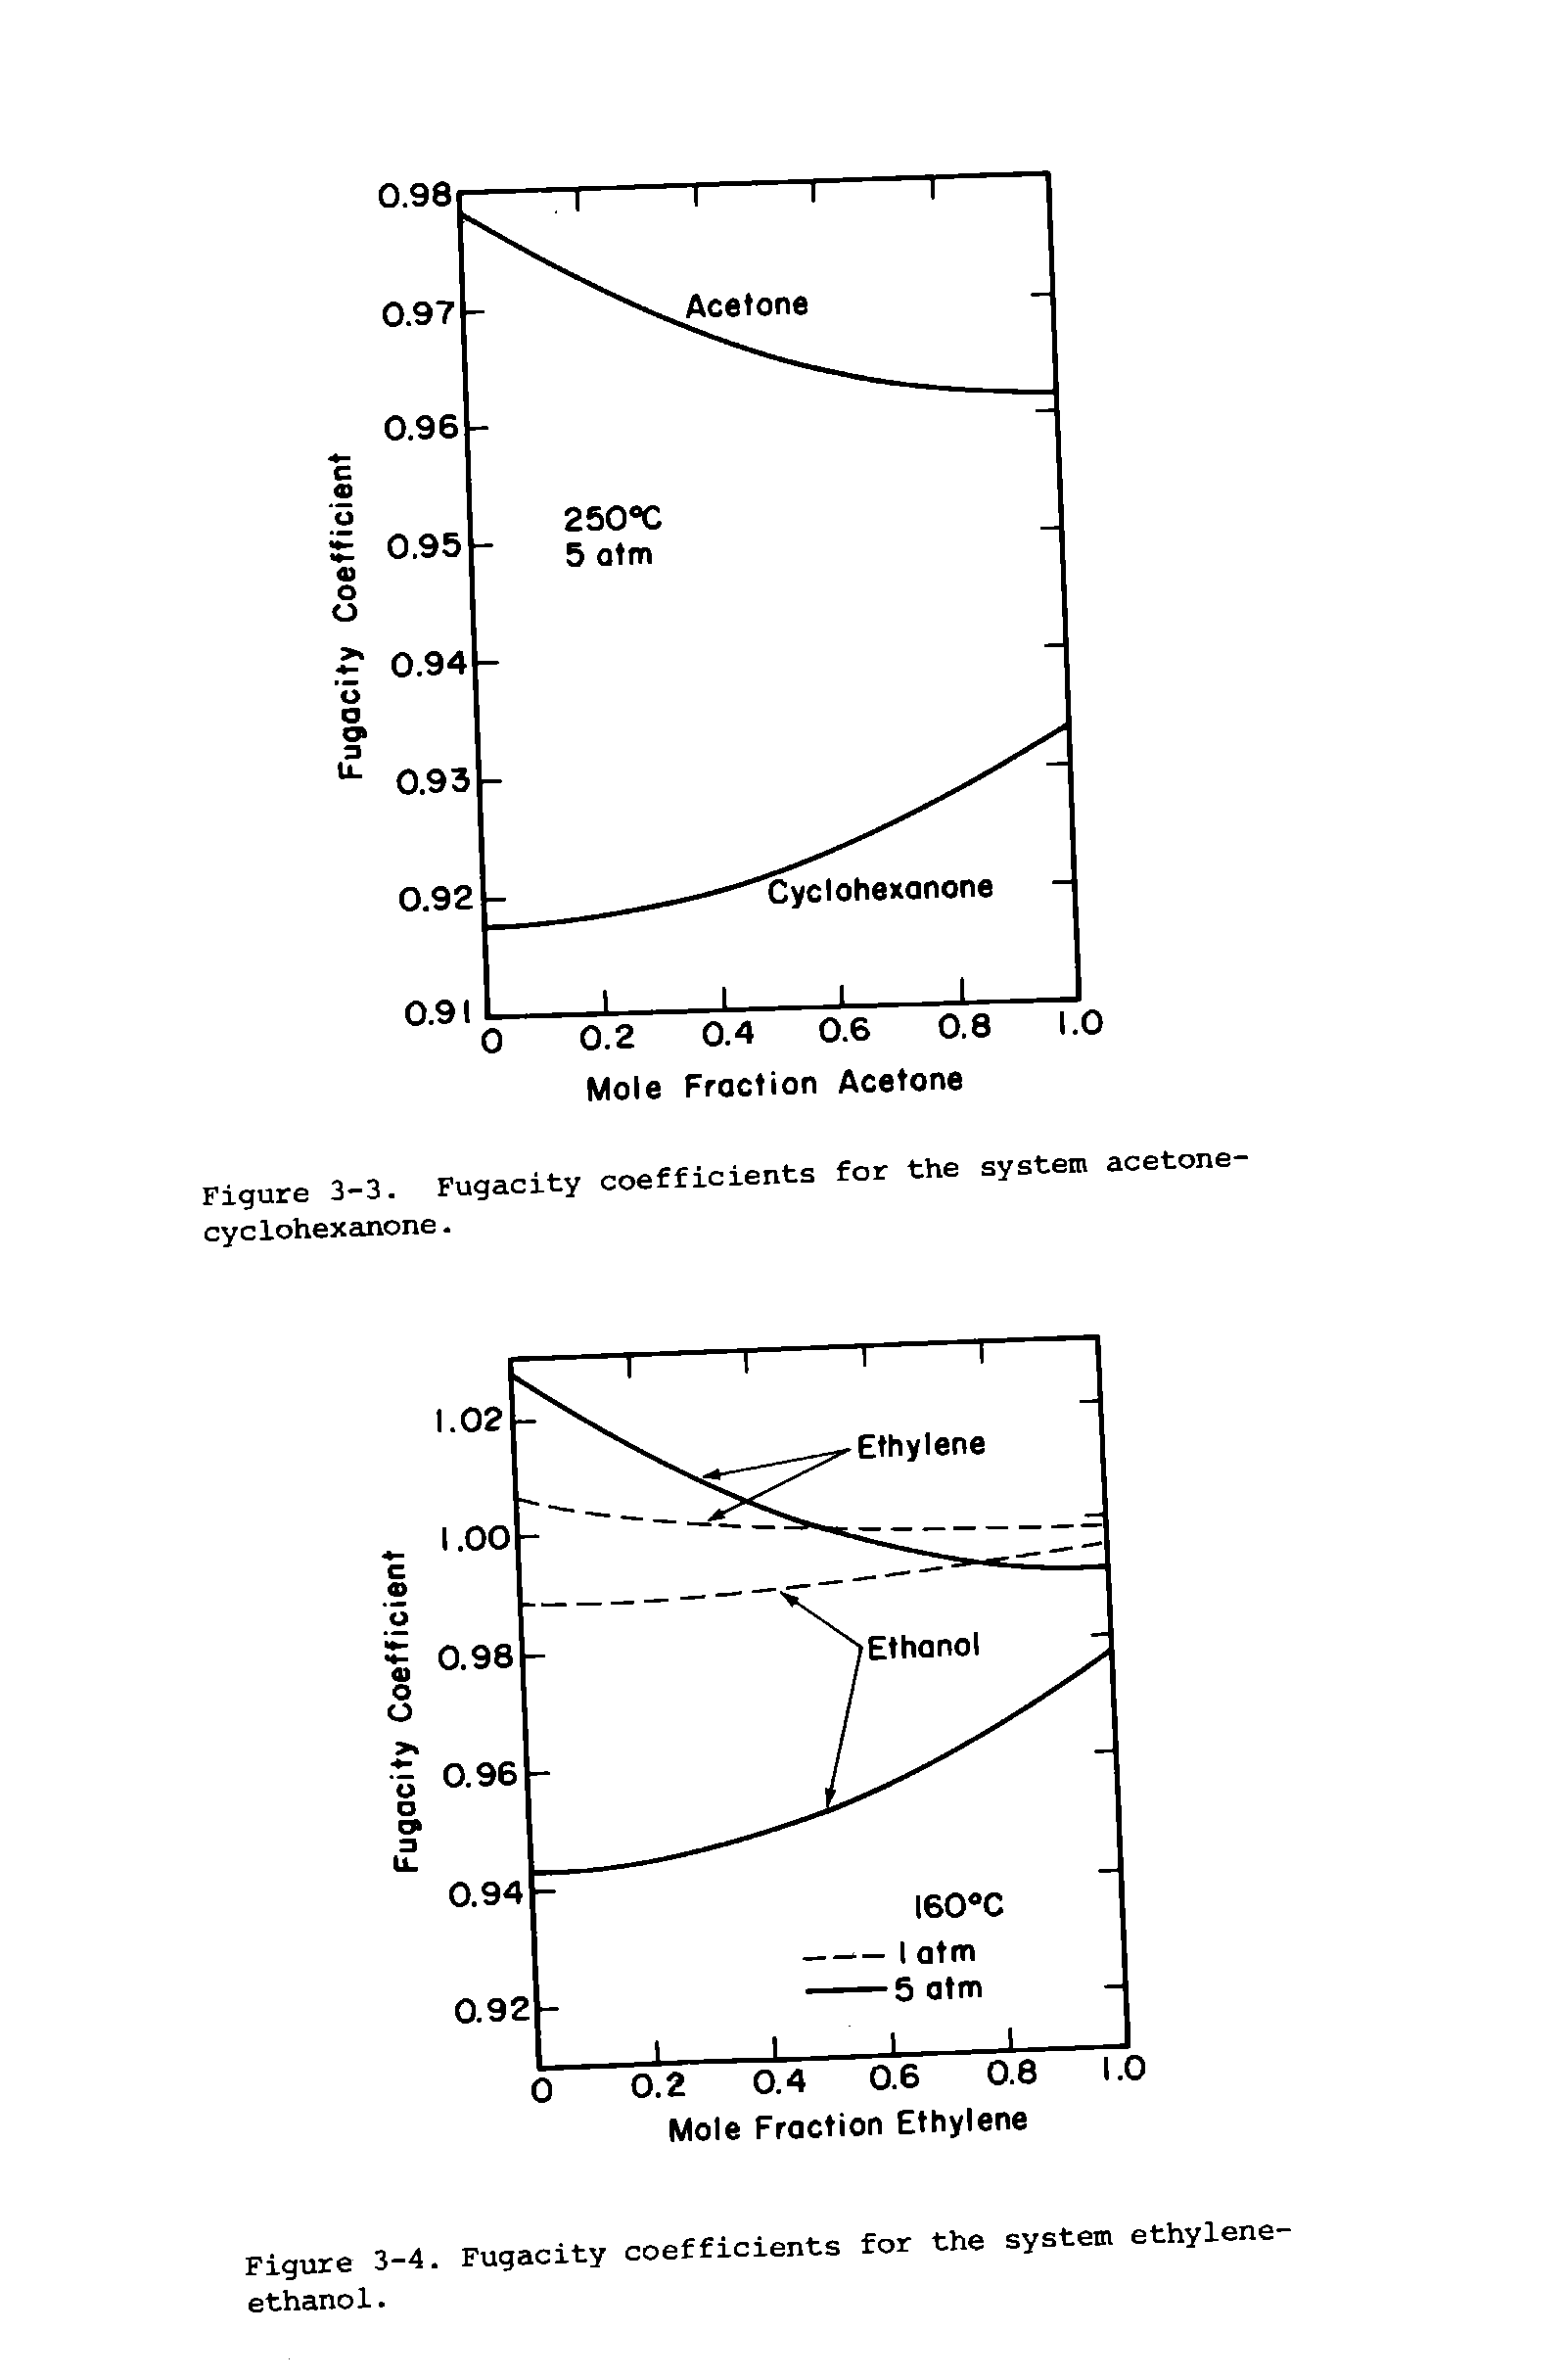 Figure 3-4. Fugacity coefficients for the system ethylene-ethanol. ...